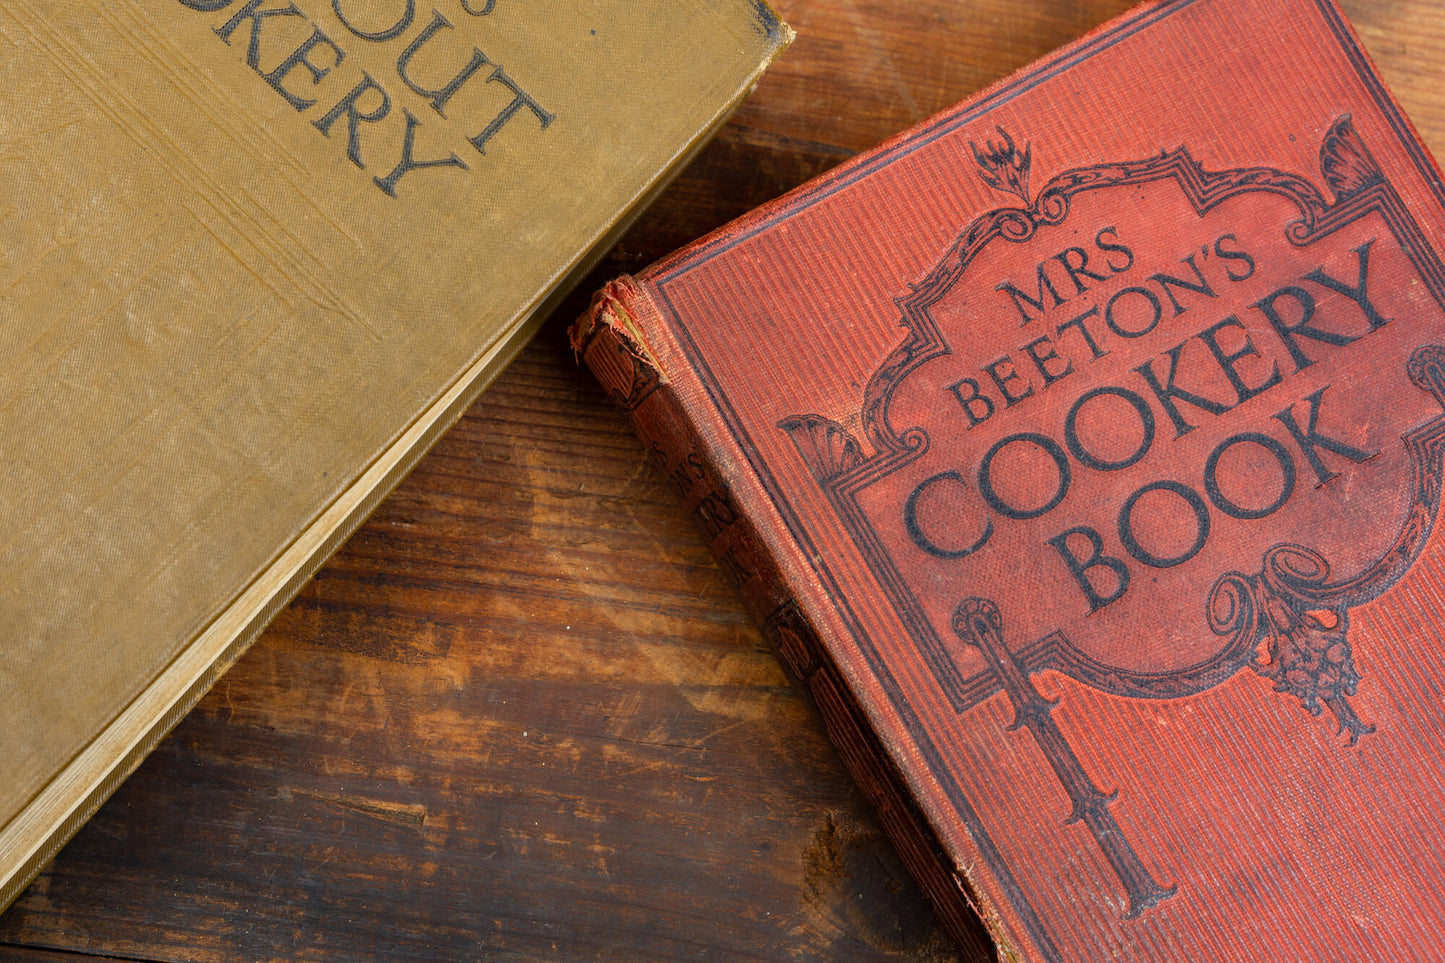 Mrs Beeton's Cookery Books